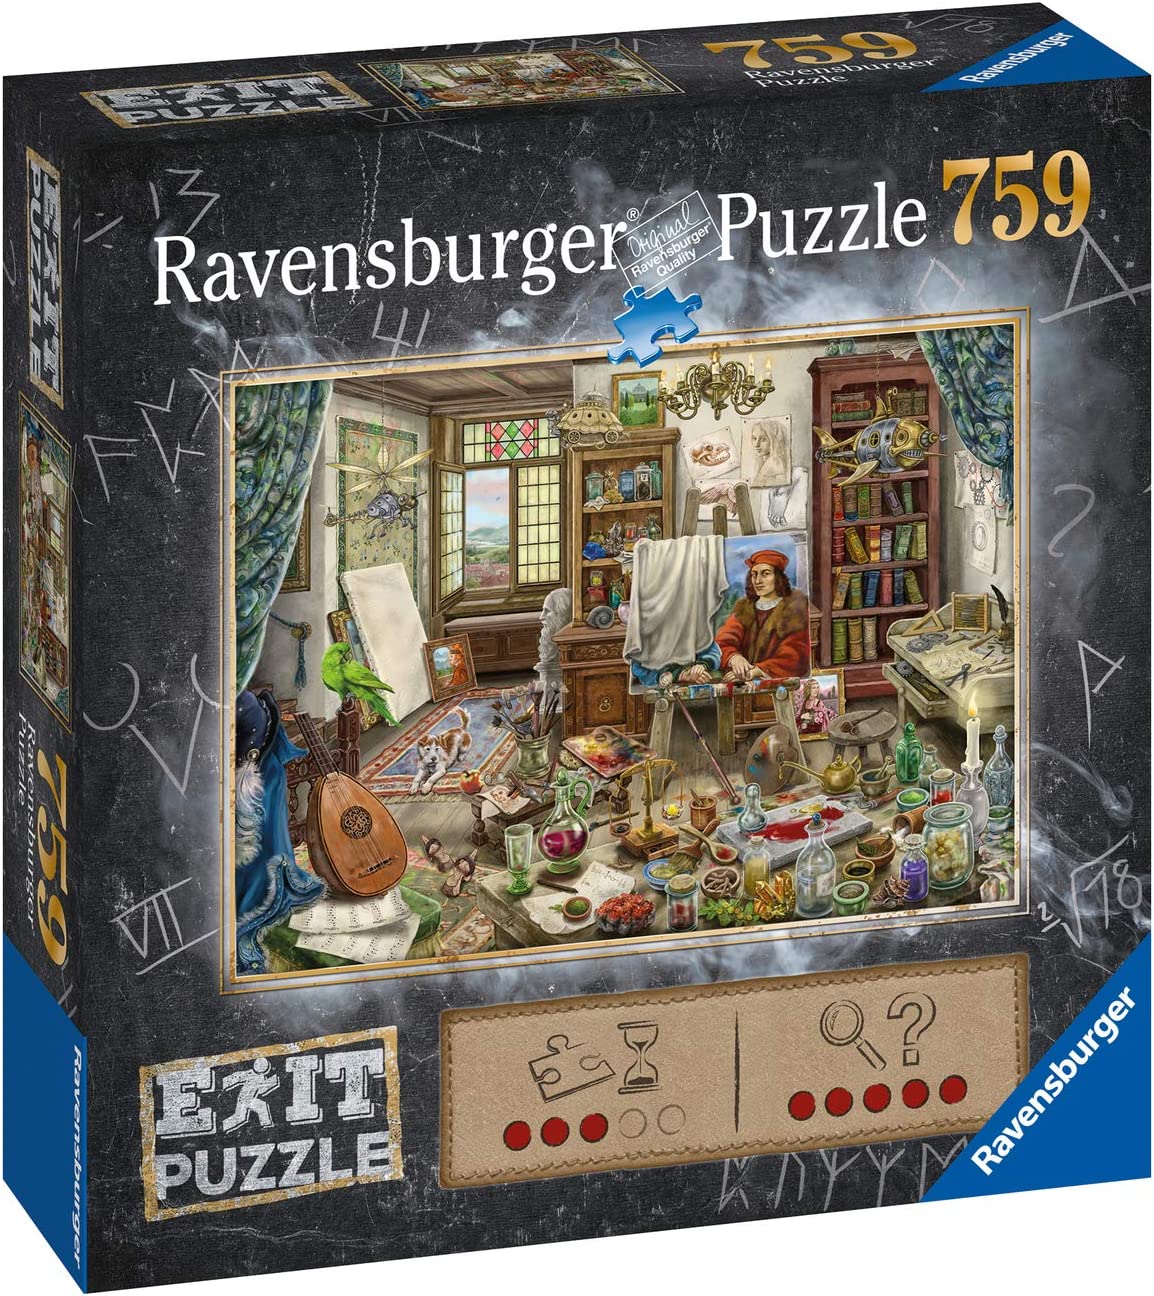 Ravensburger Escape Puzzle - Da Vinci (759 Pieces) Sold by Board Hoarders